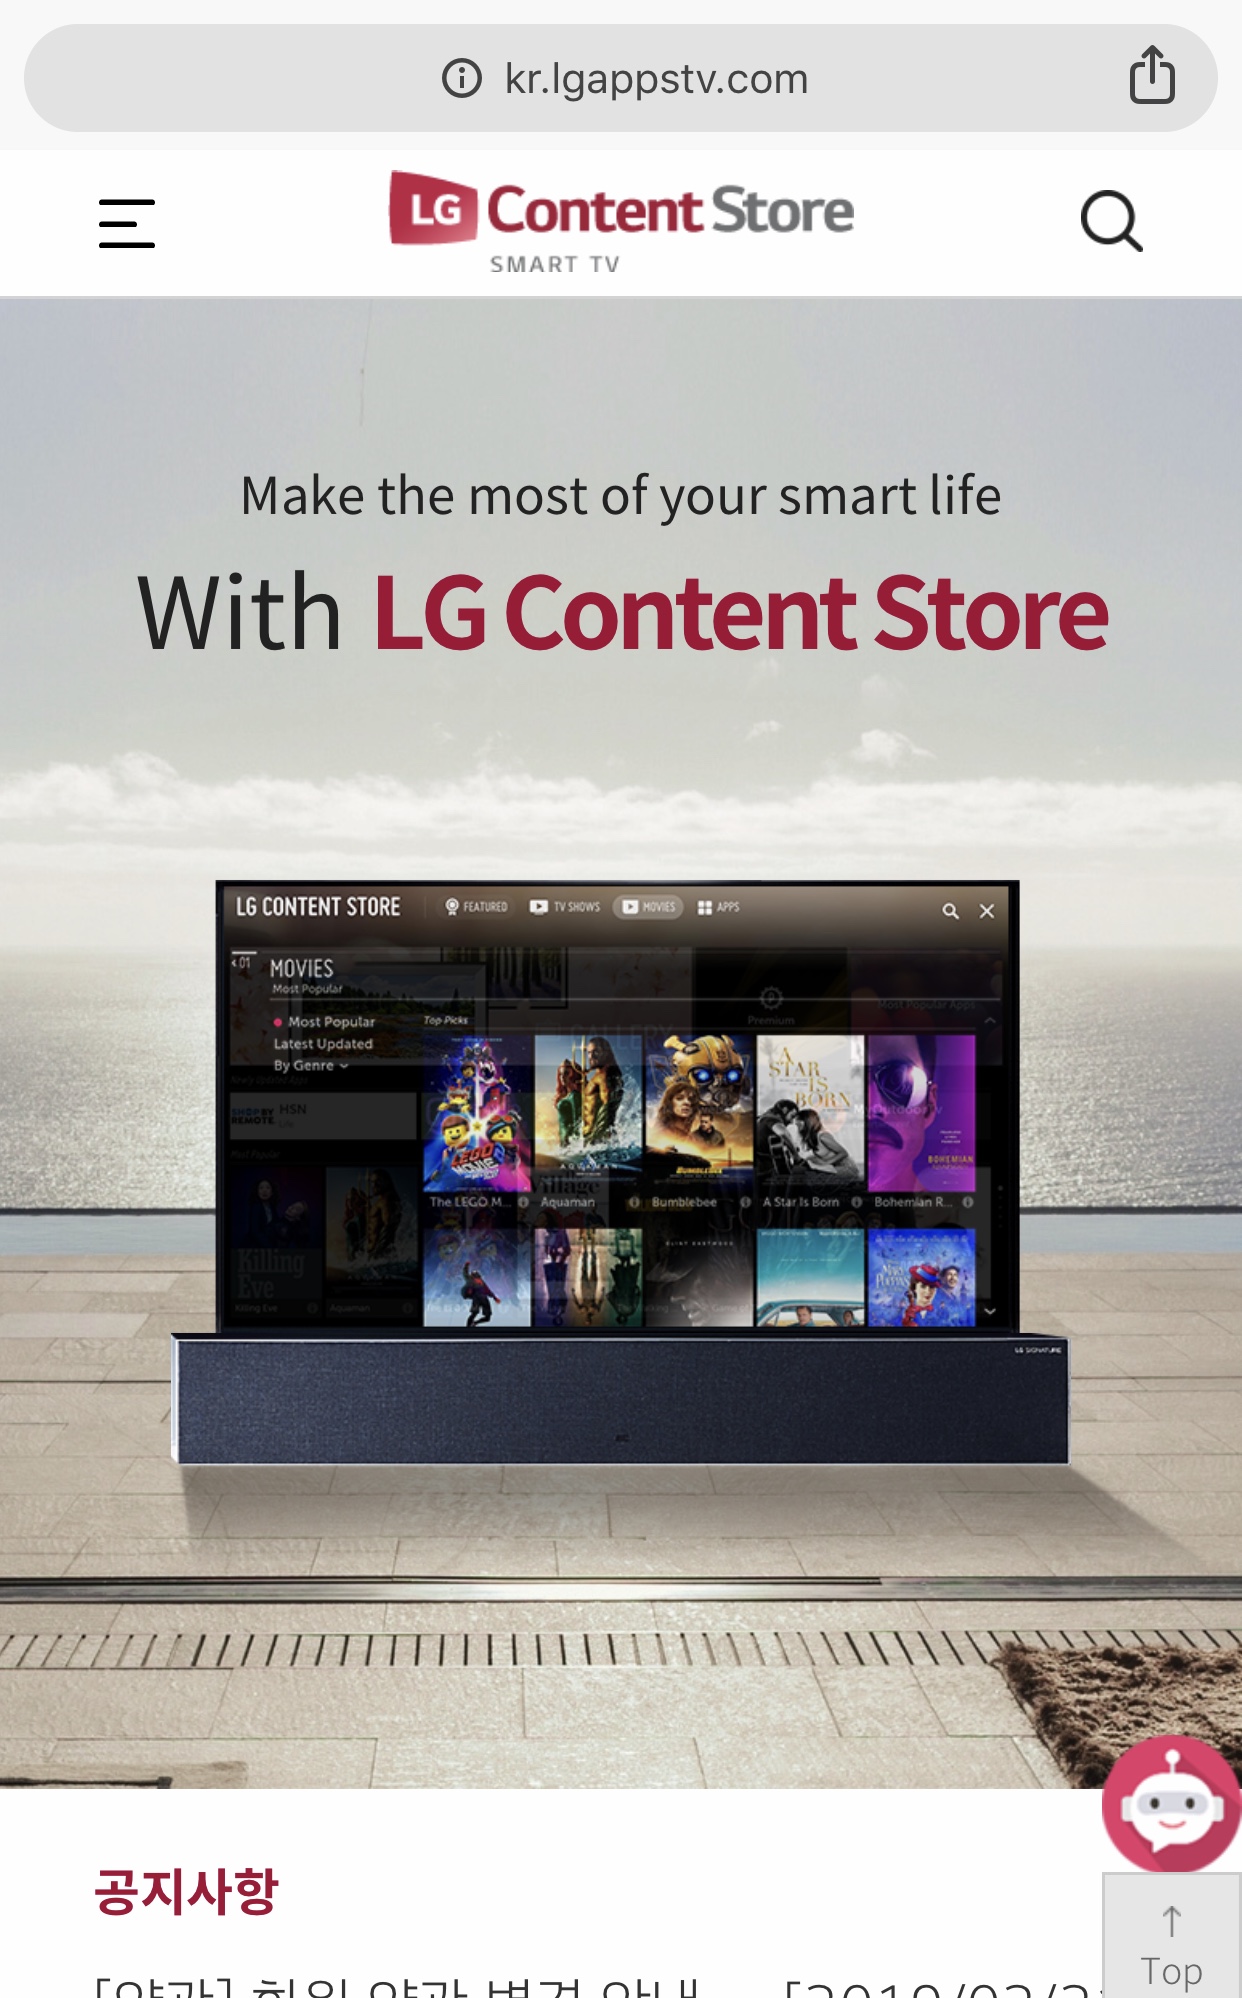 LG Content Store 모바일 대표​ 홈페이지 스크릿샷